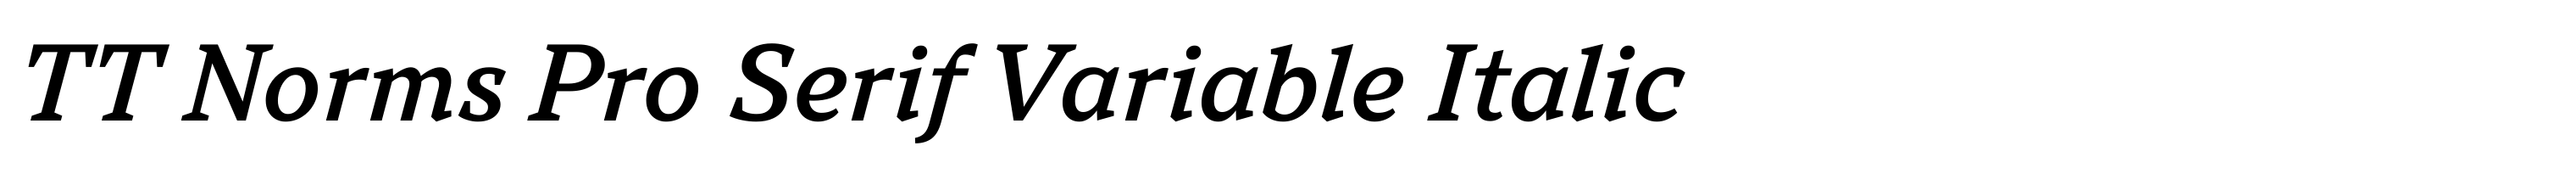 TT Norms Pro Serif Variable Italic